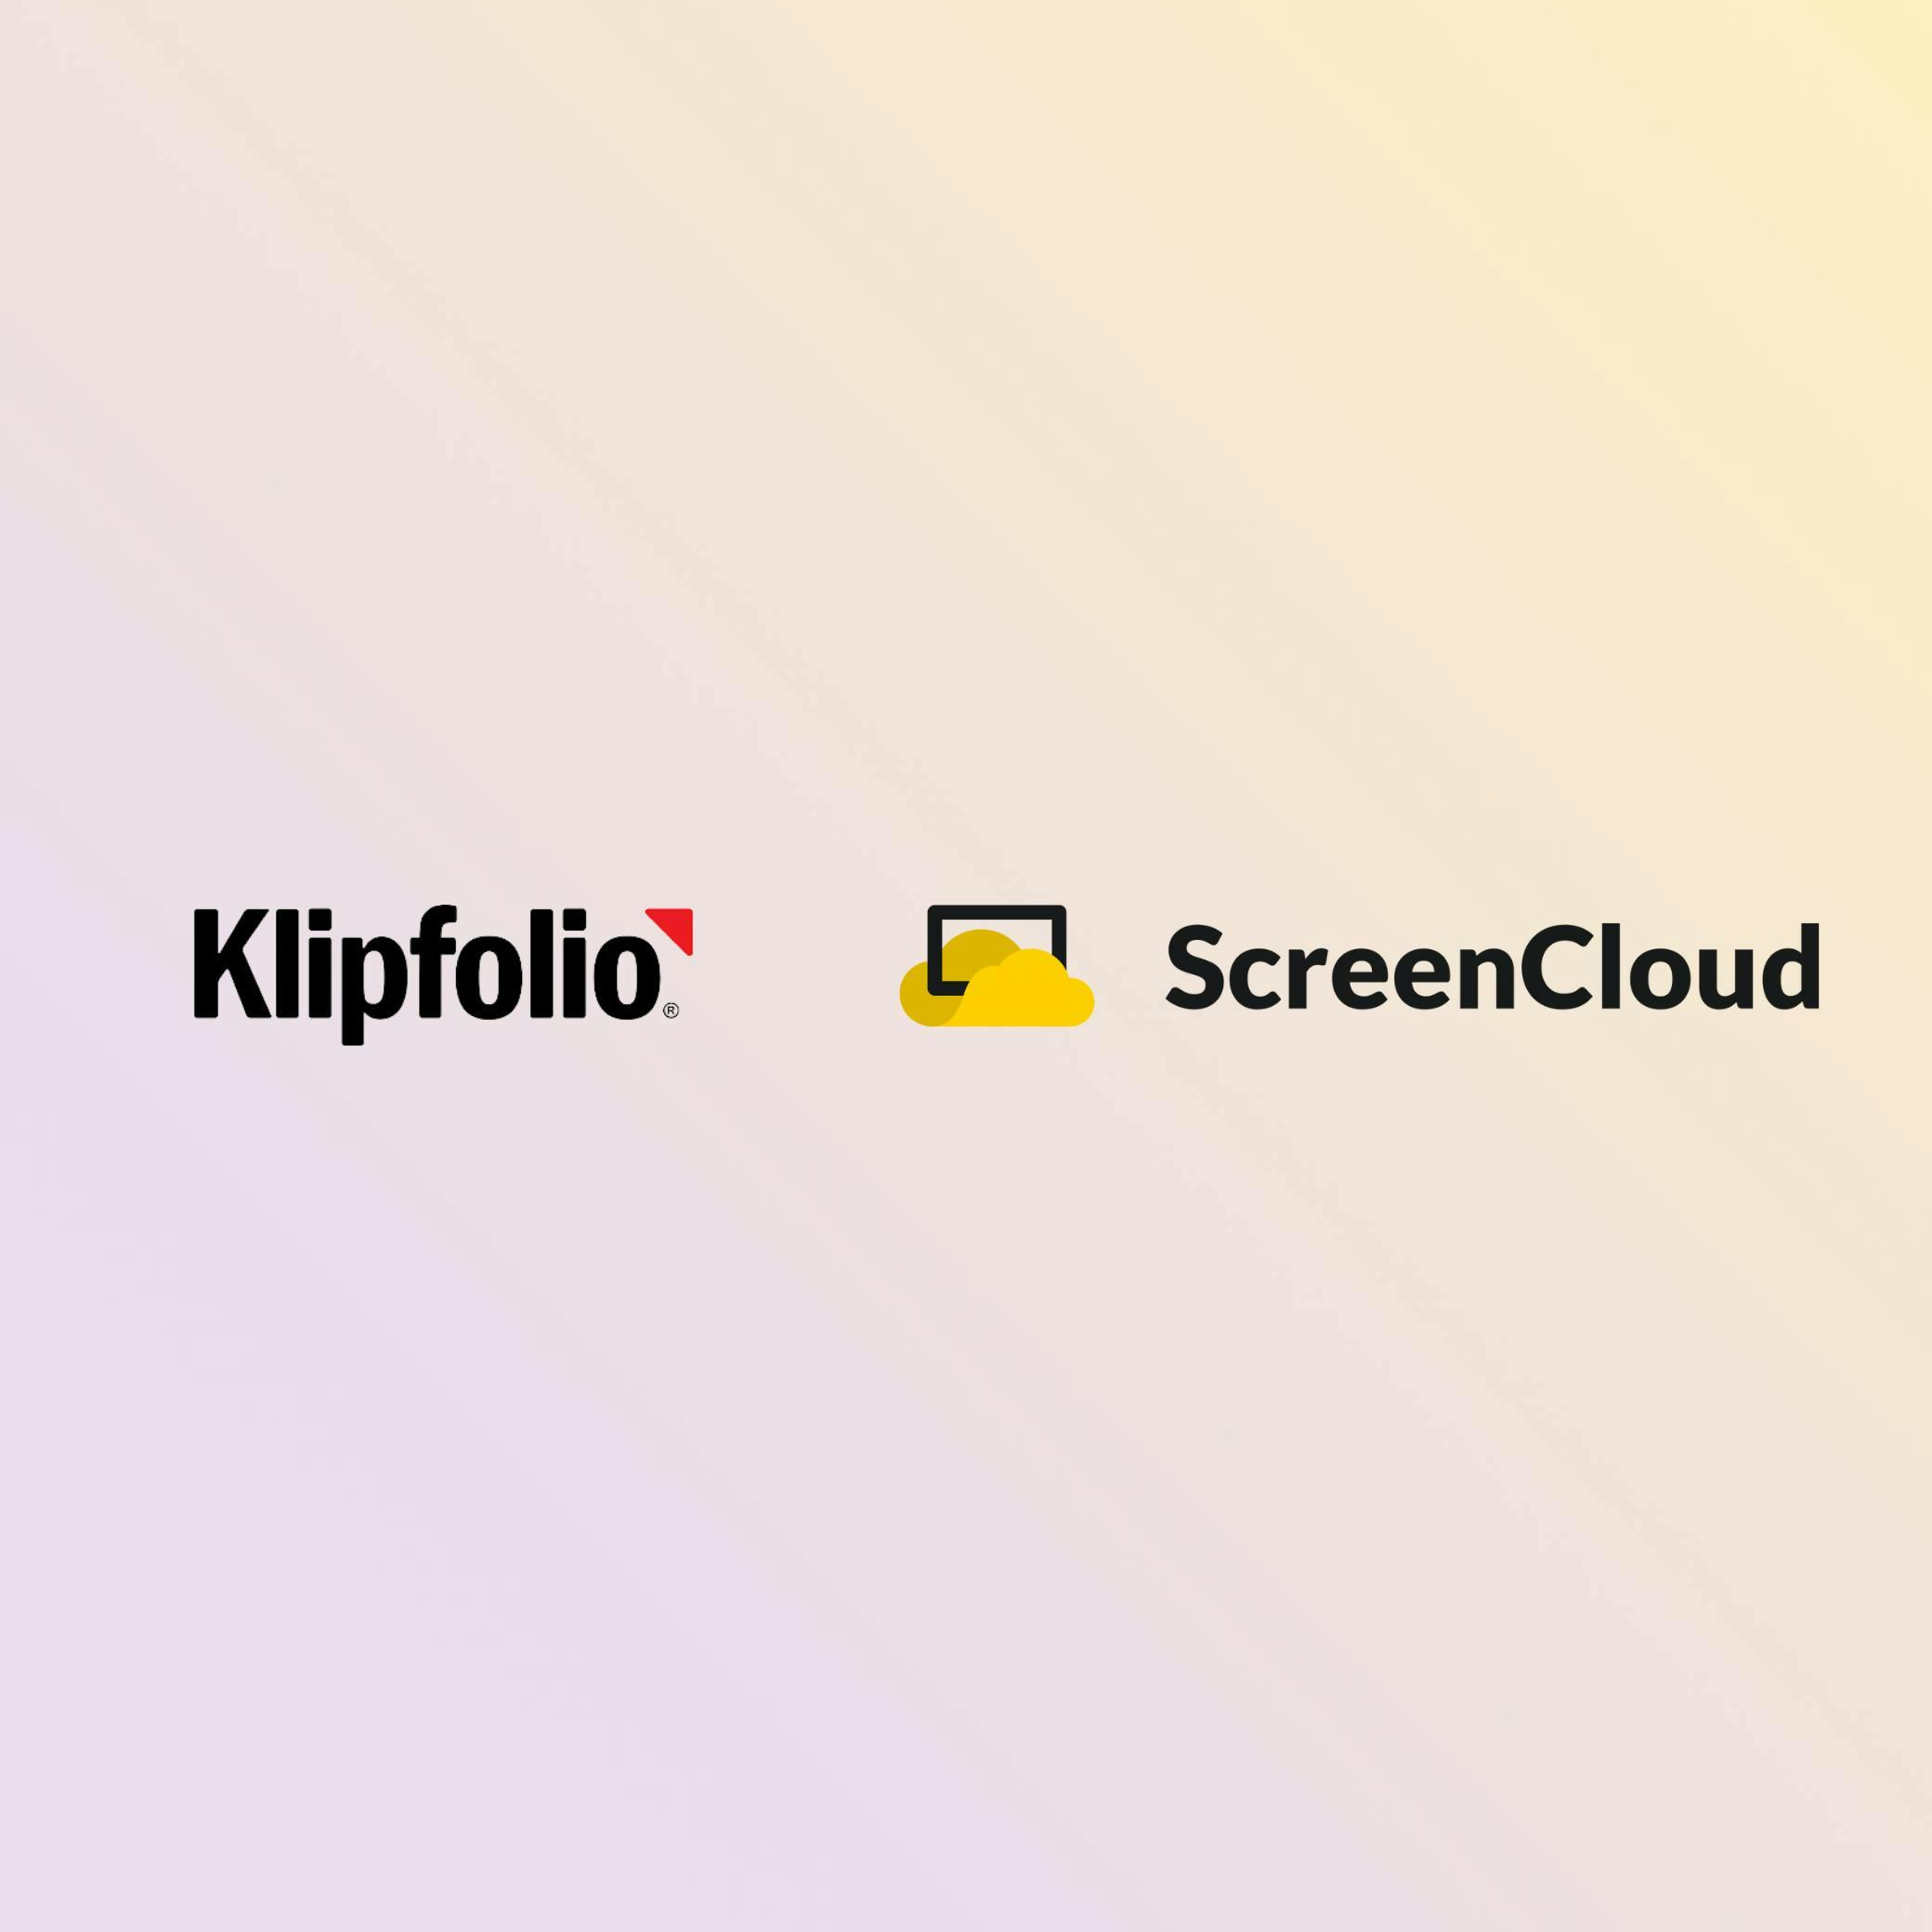 ScreenCloud Article - The Klipfolio for Digital Signage Guide